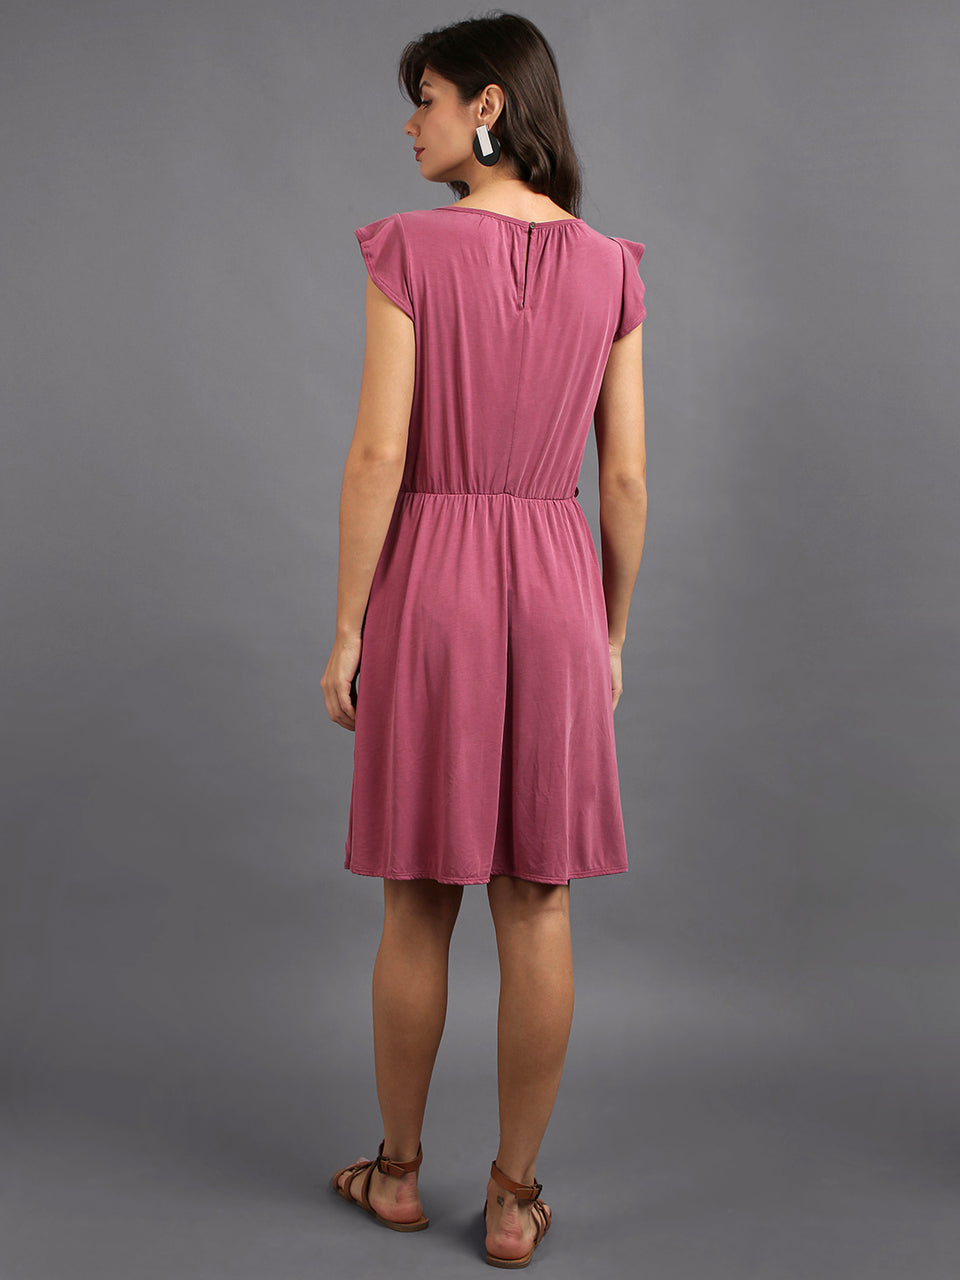 women solid dark pink a line dress 